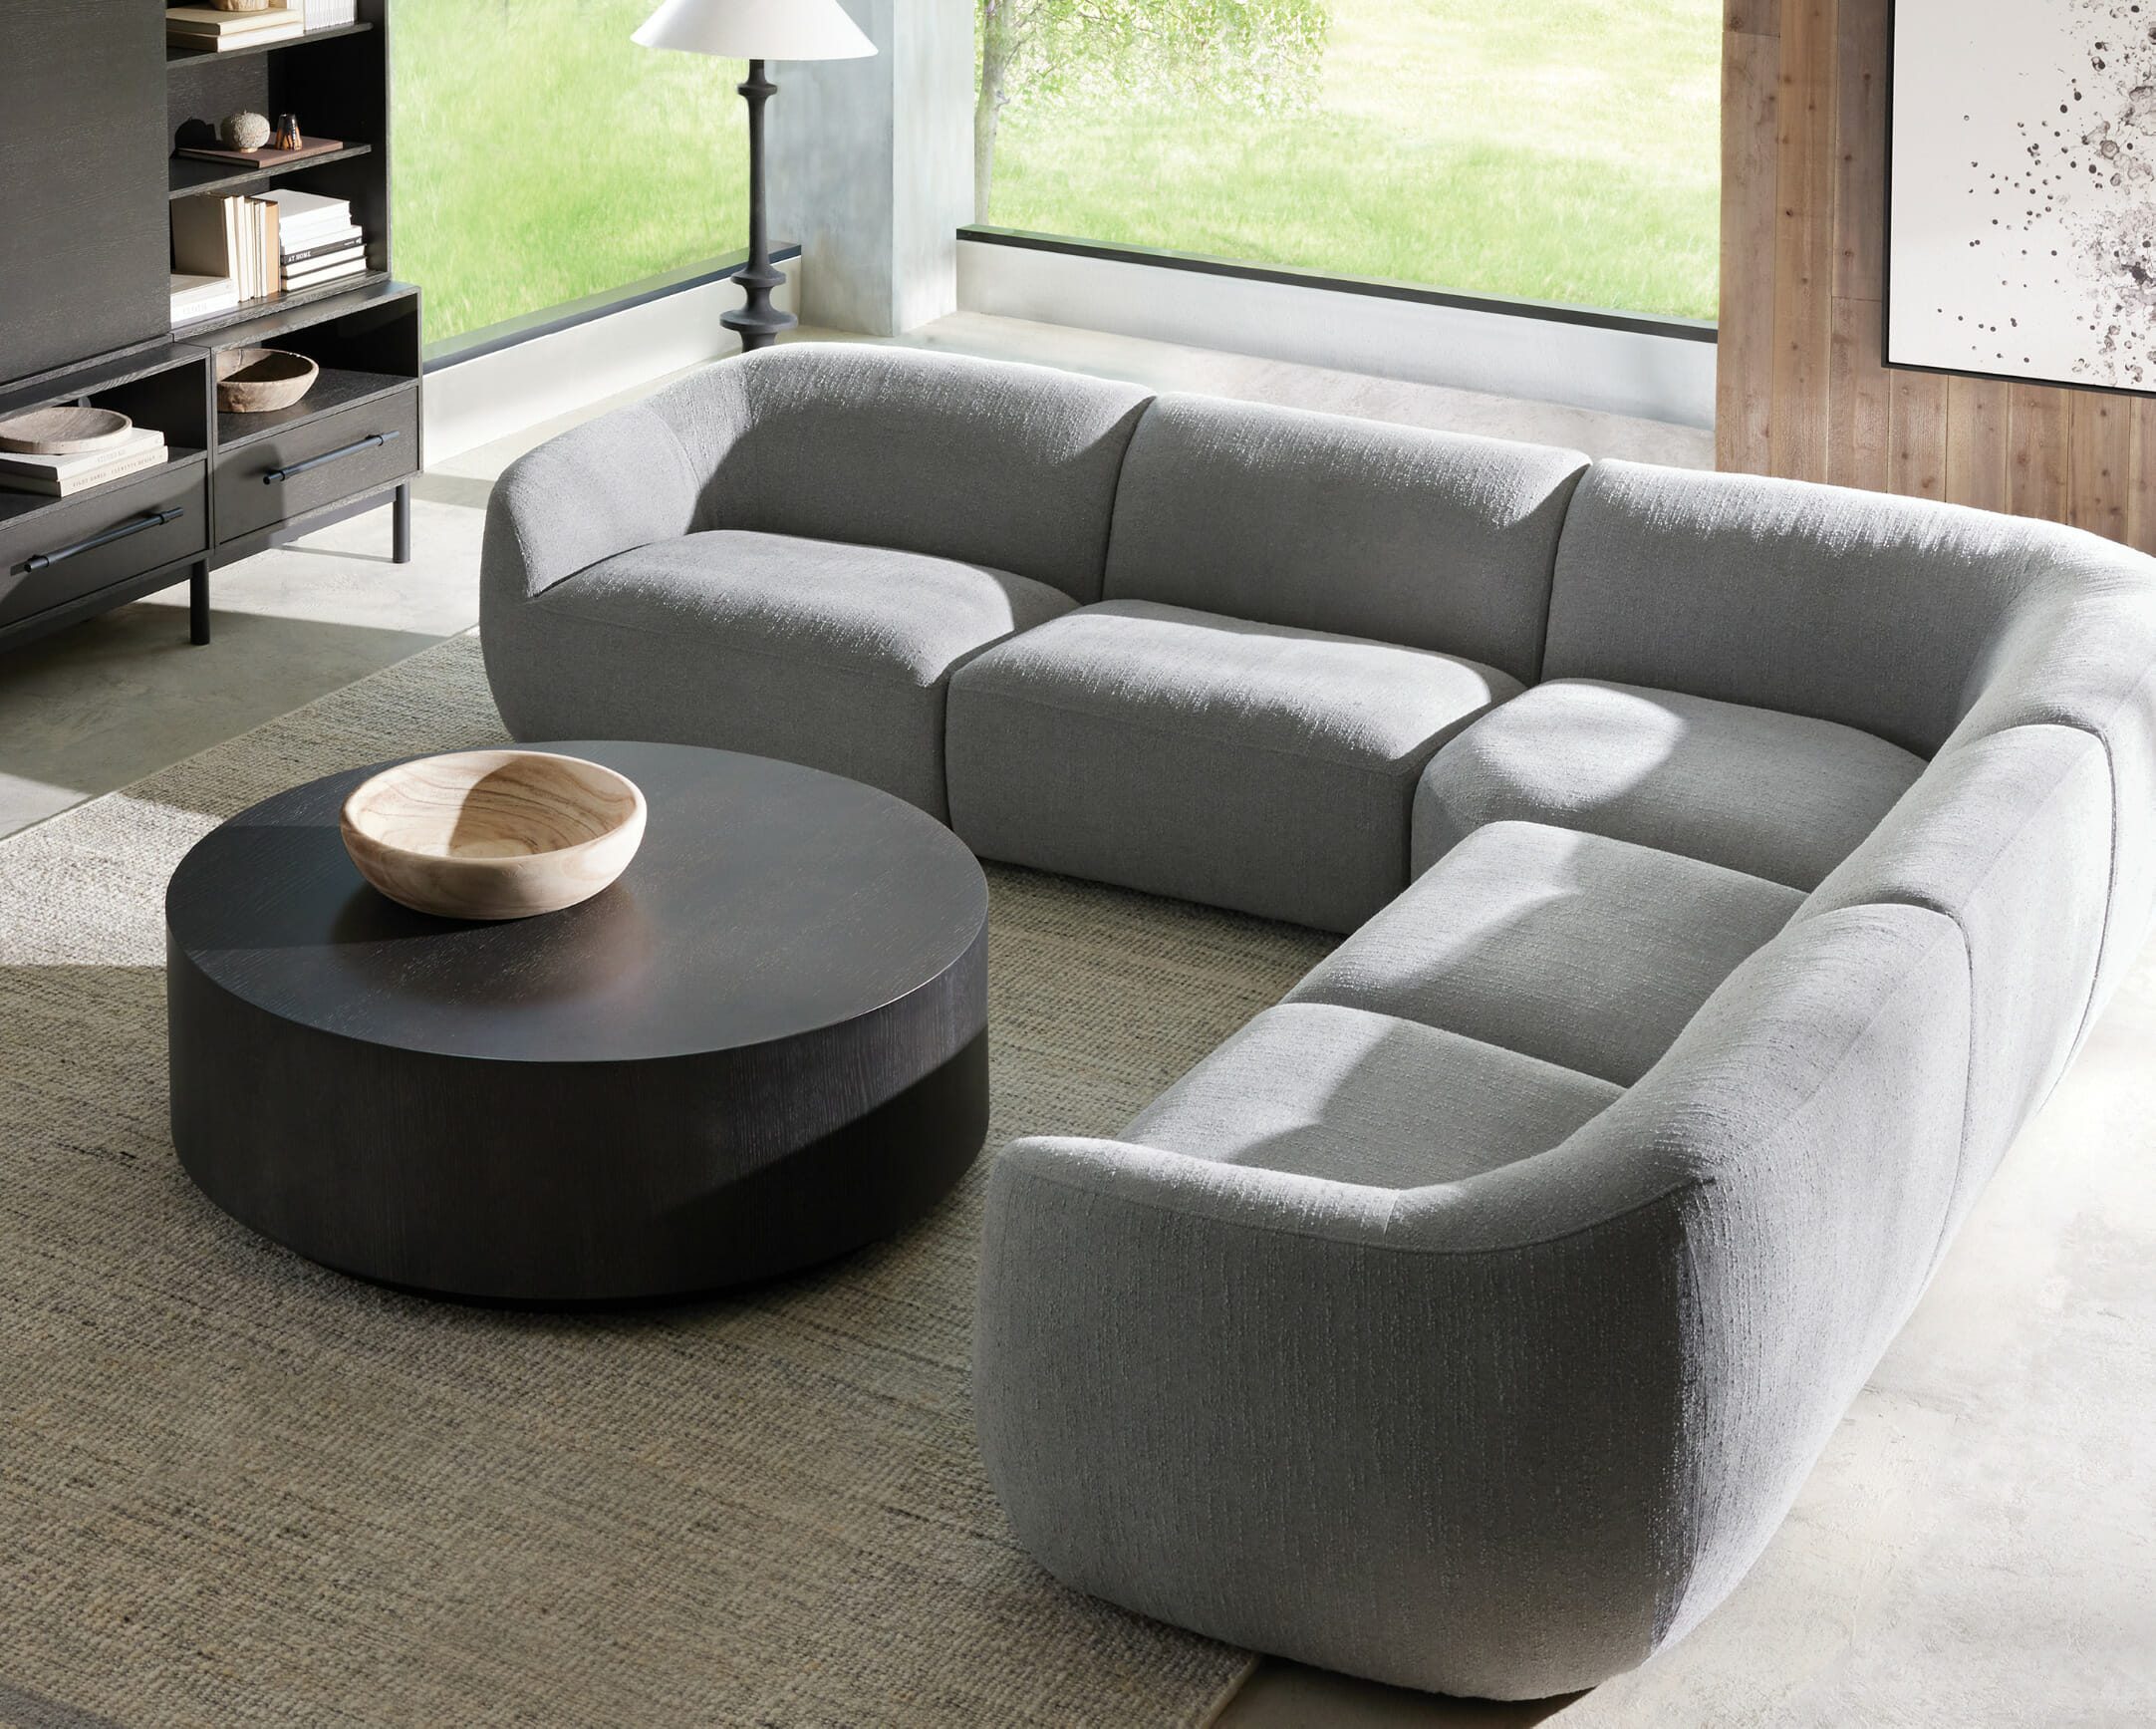 Arhaus Furniture Incredible Quality To